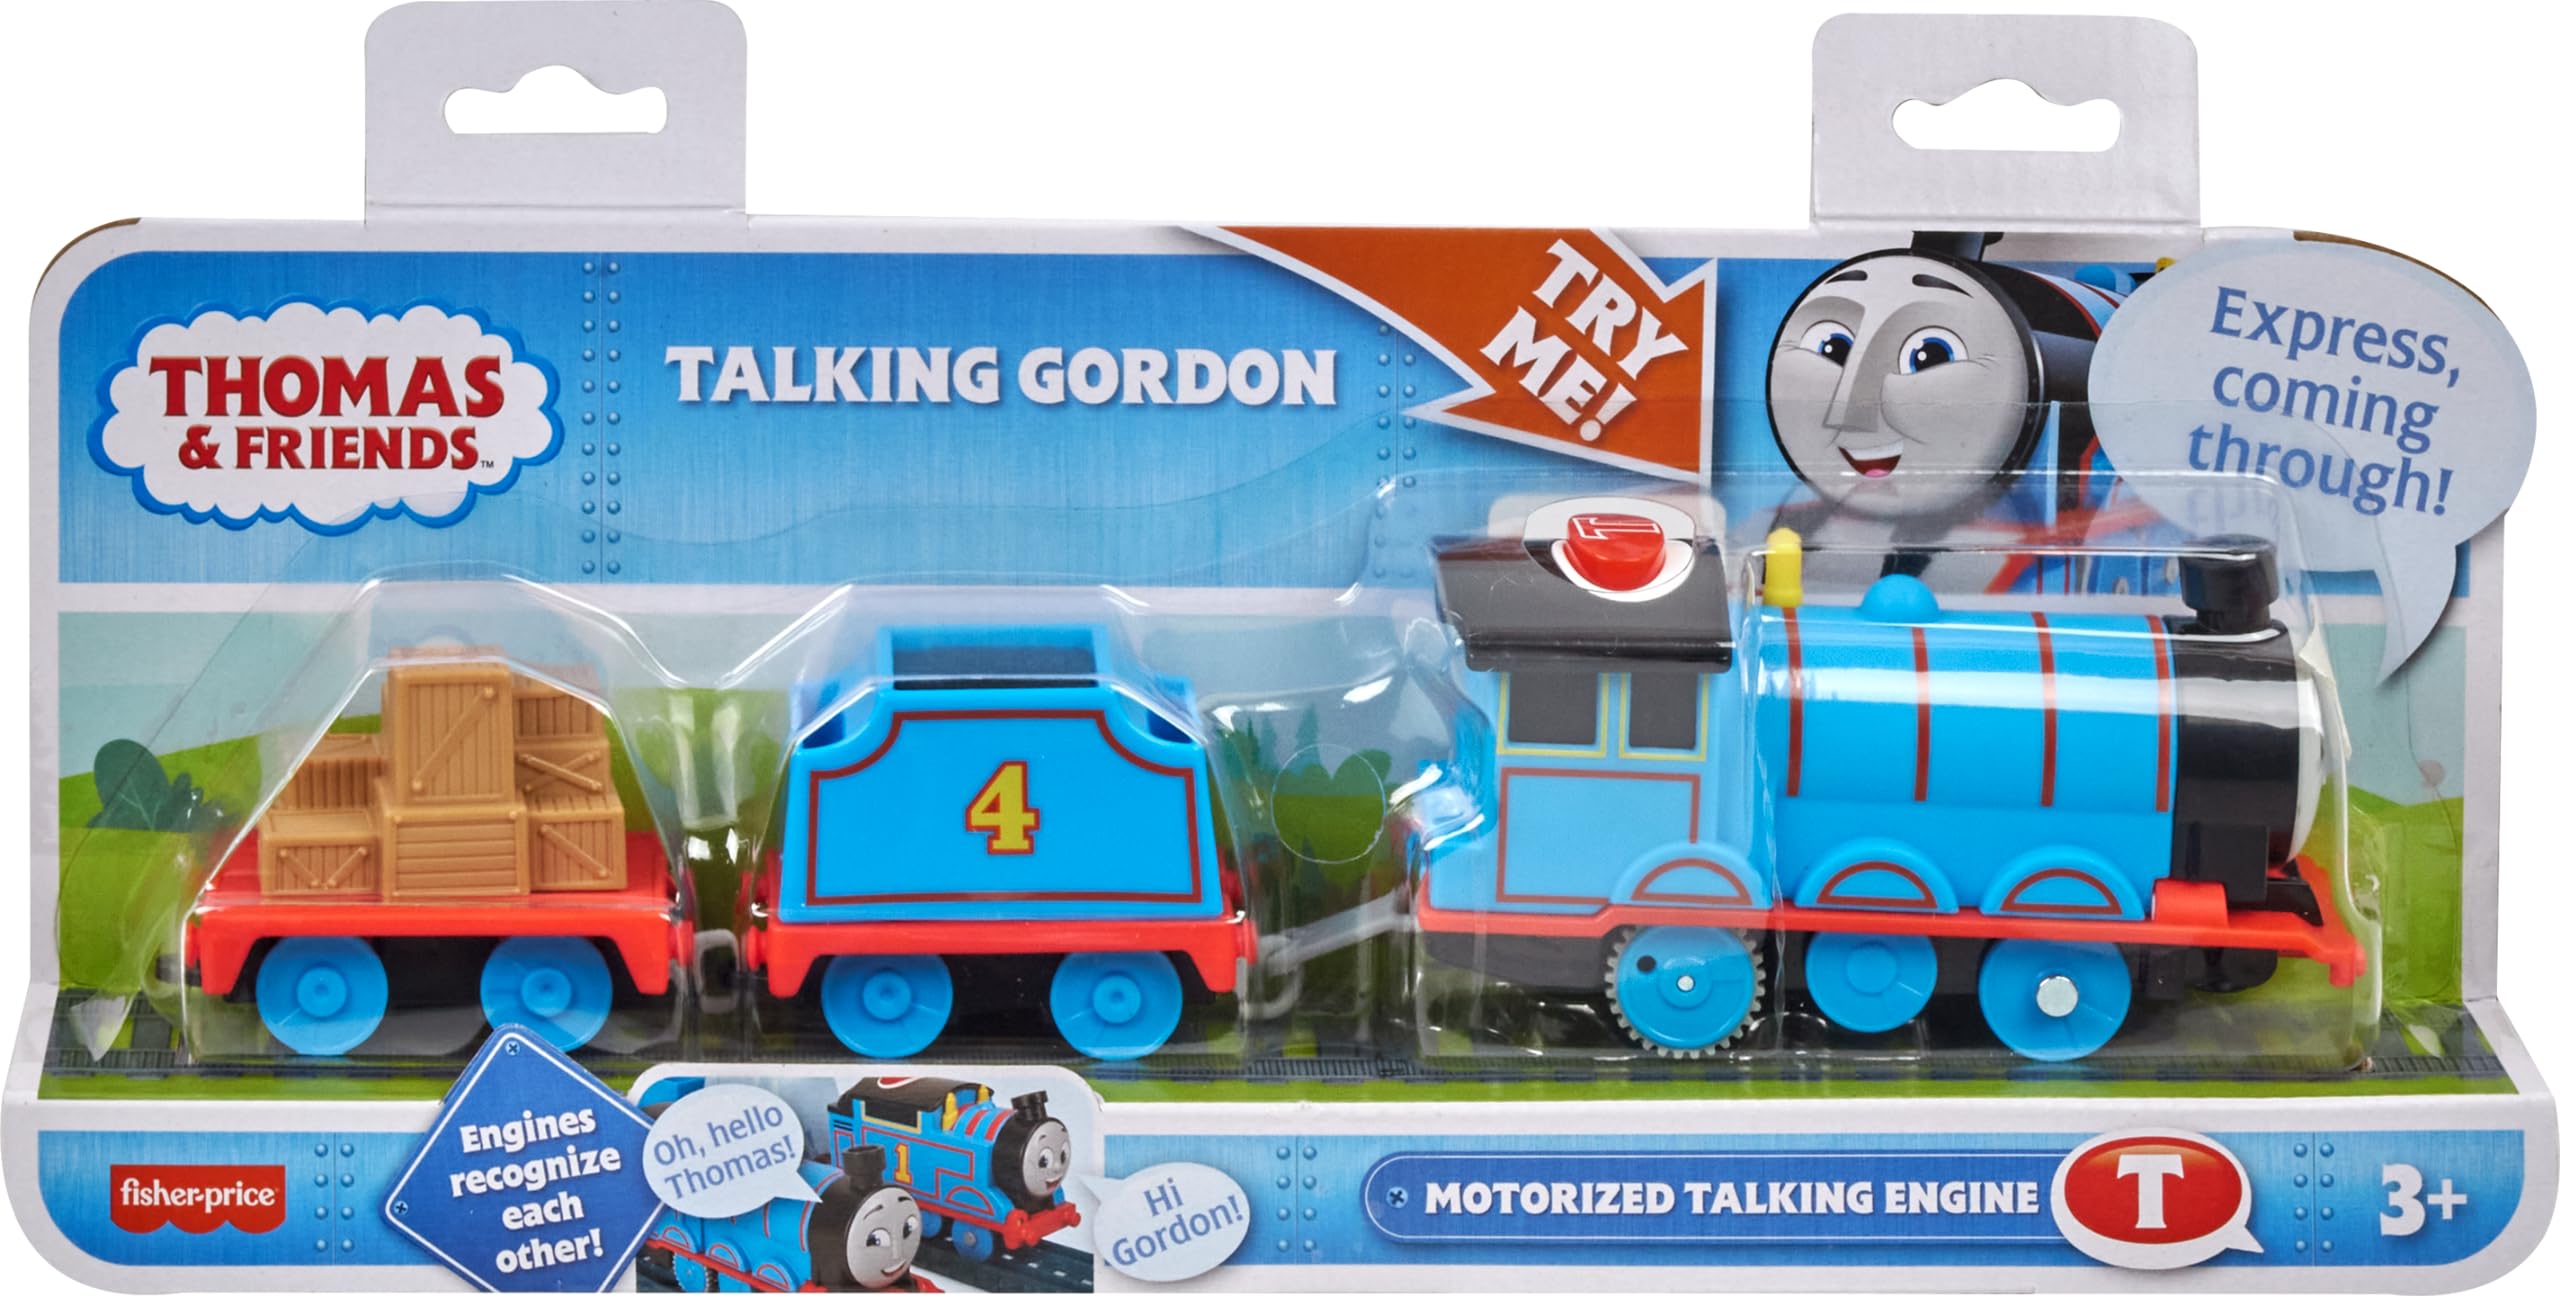 Thomas & Friends Motorized Talking Gordon